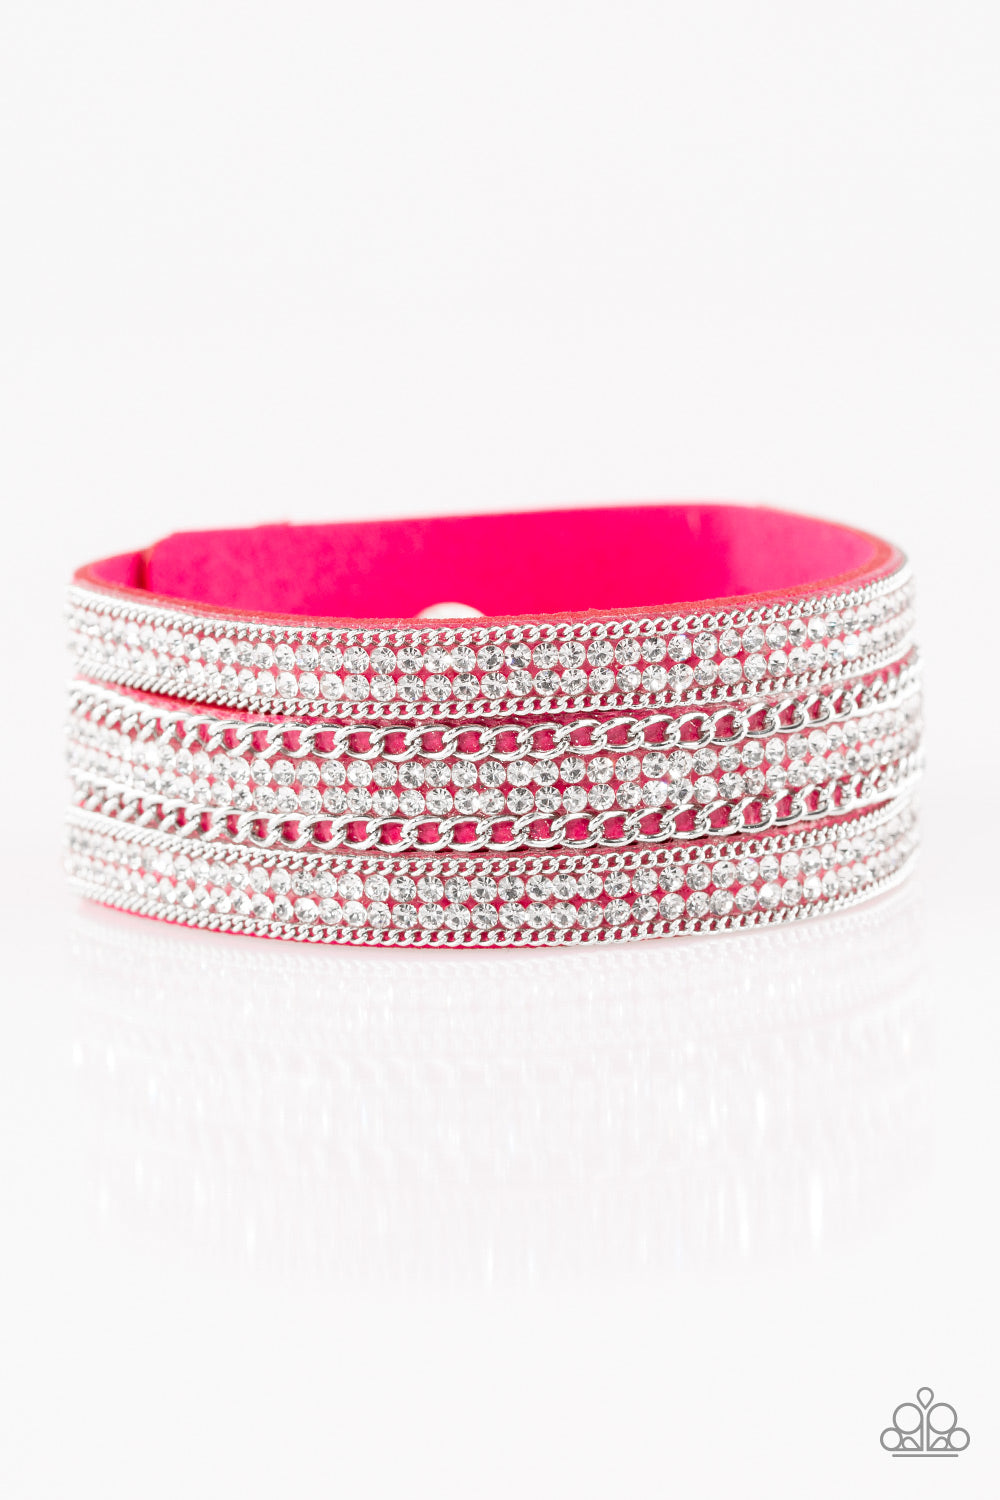 Dangerously Drama Queen Pink Bracelet - Paparazzi Accessories 